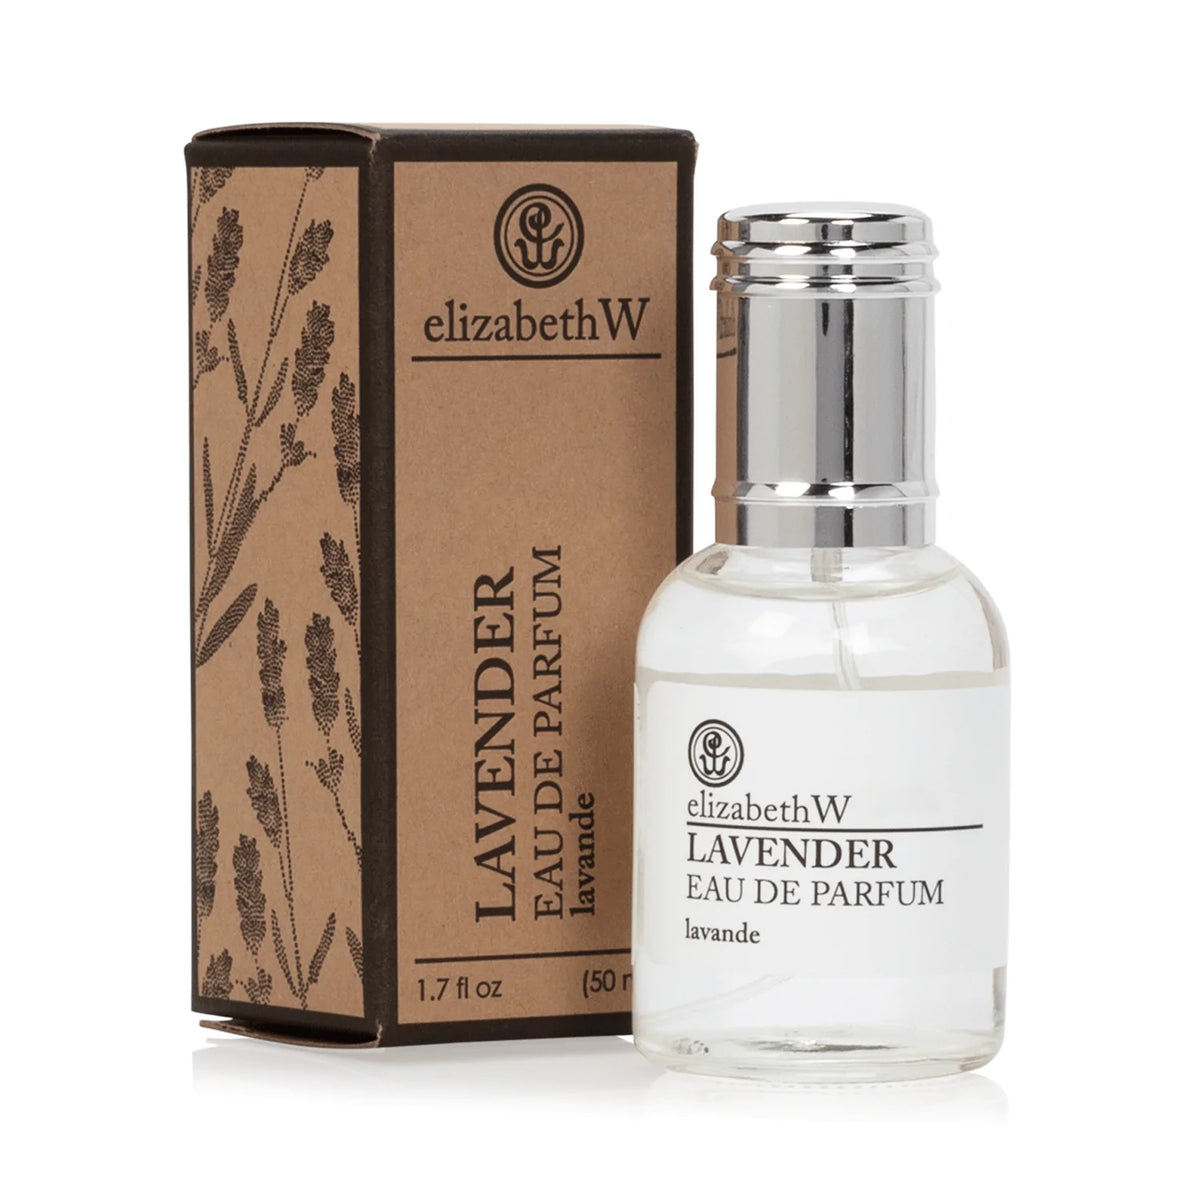 A transparent glass perfume bottle with a silver cap, labeled "elizabeth W Purely Essential Lavender Eau de Parfum," next to its brown packaging box featuring lavender plant illustrations.